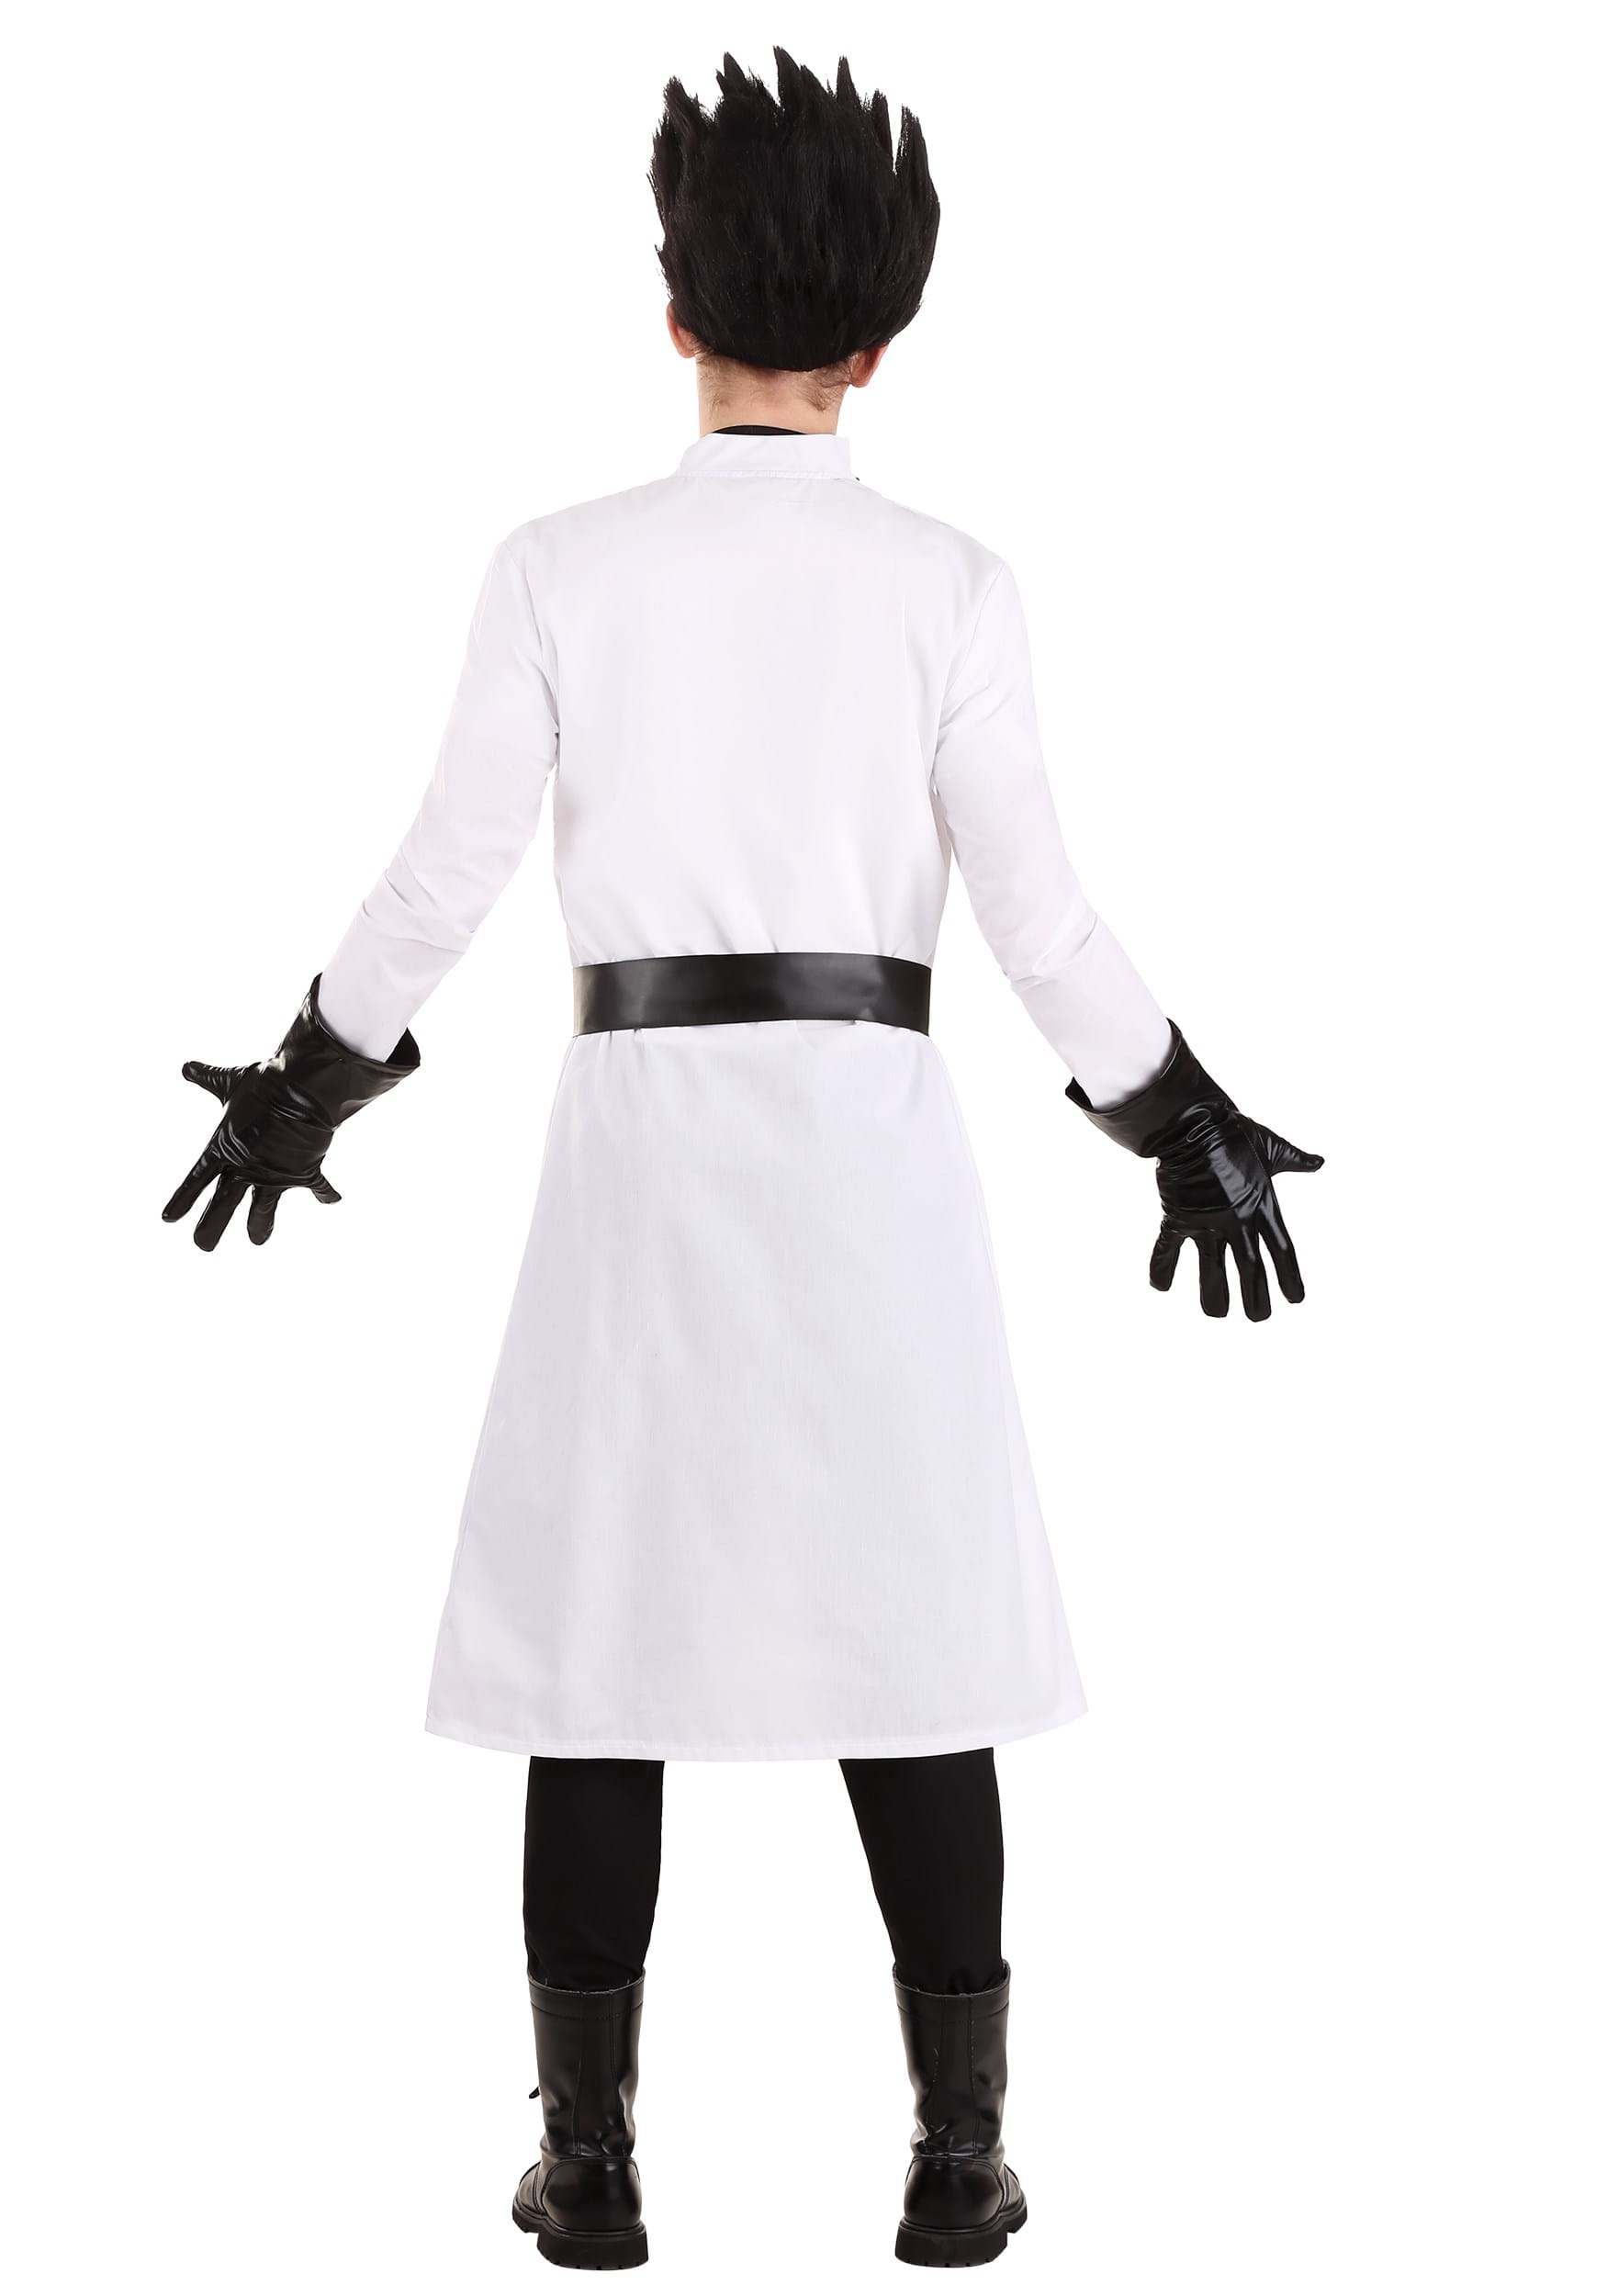 Deluxe Mad Scientist Adult Costume